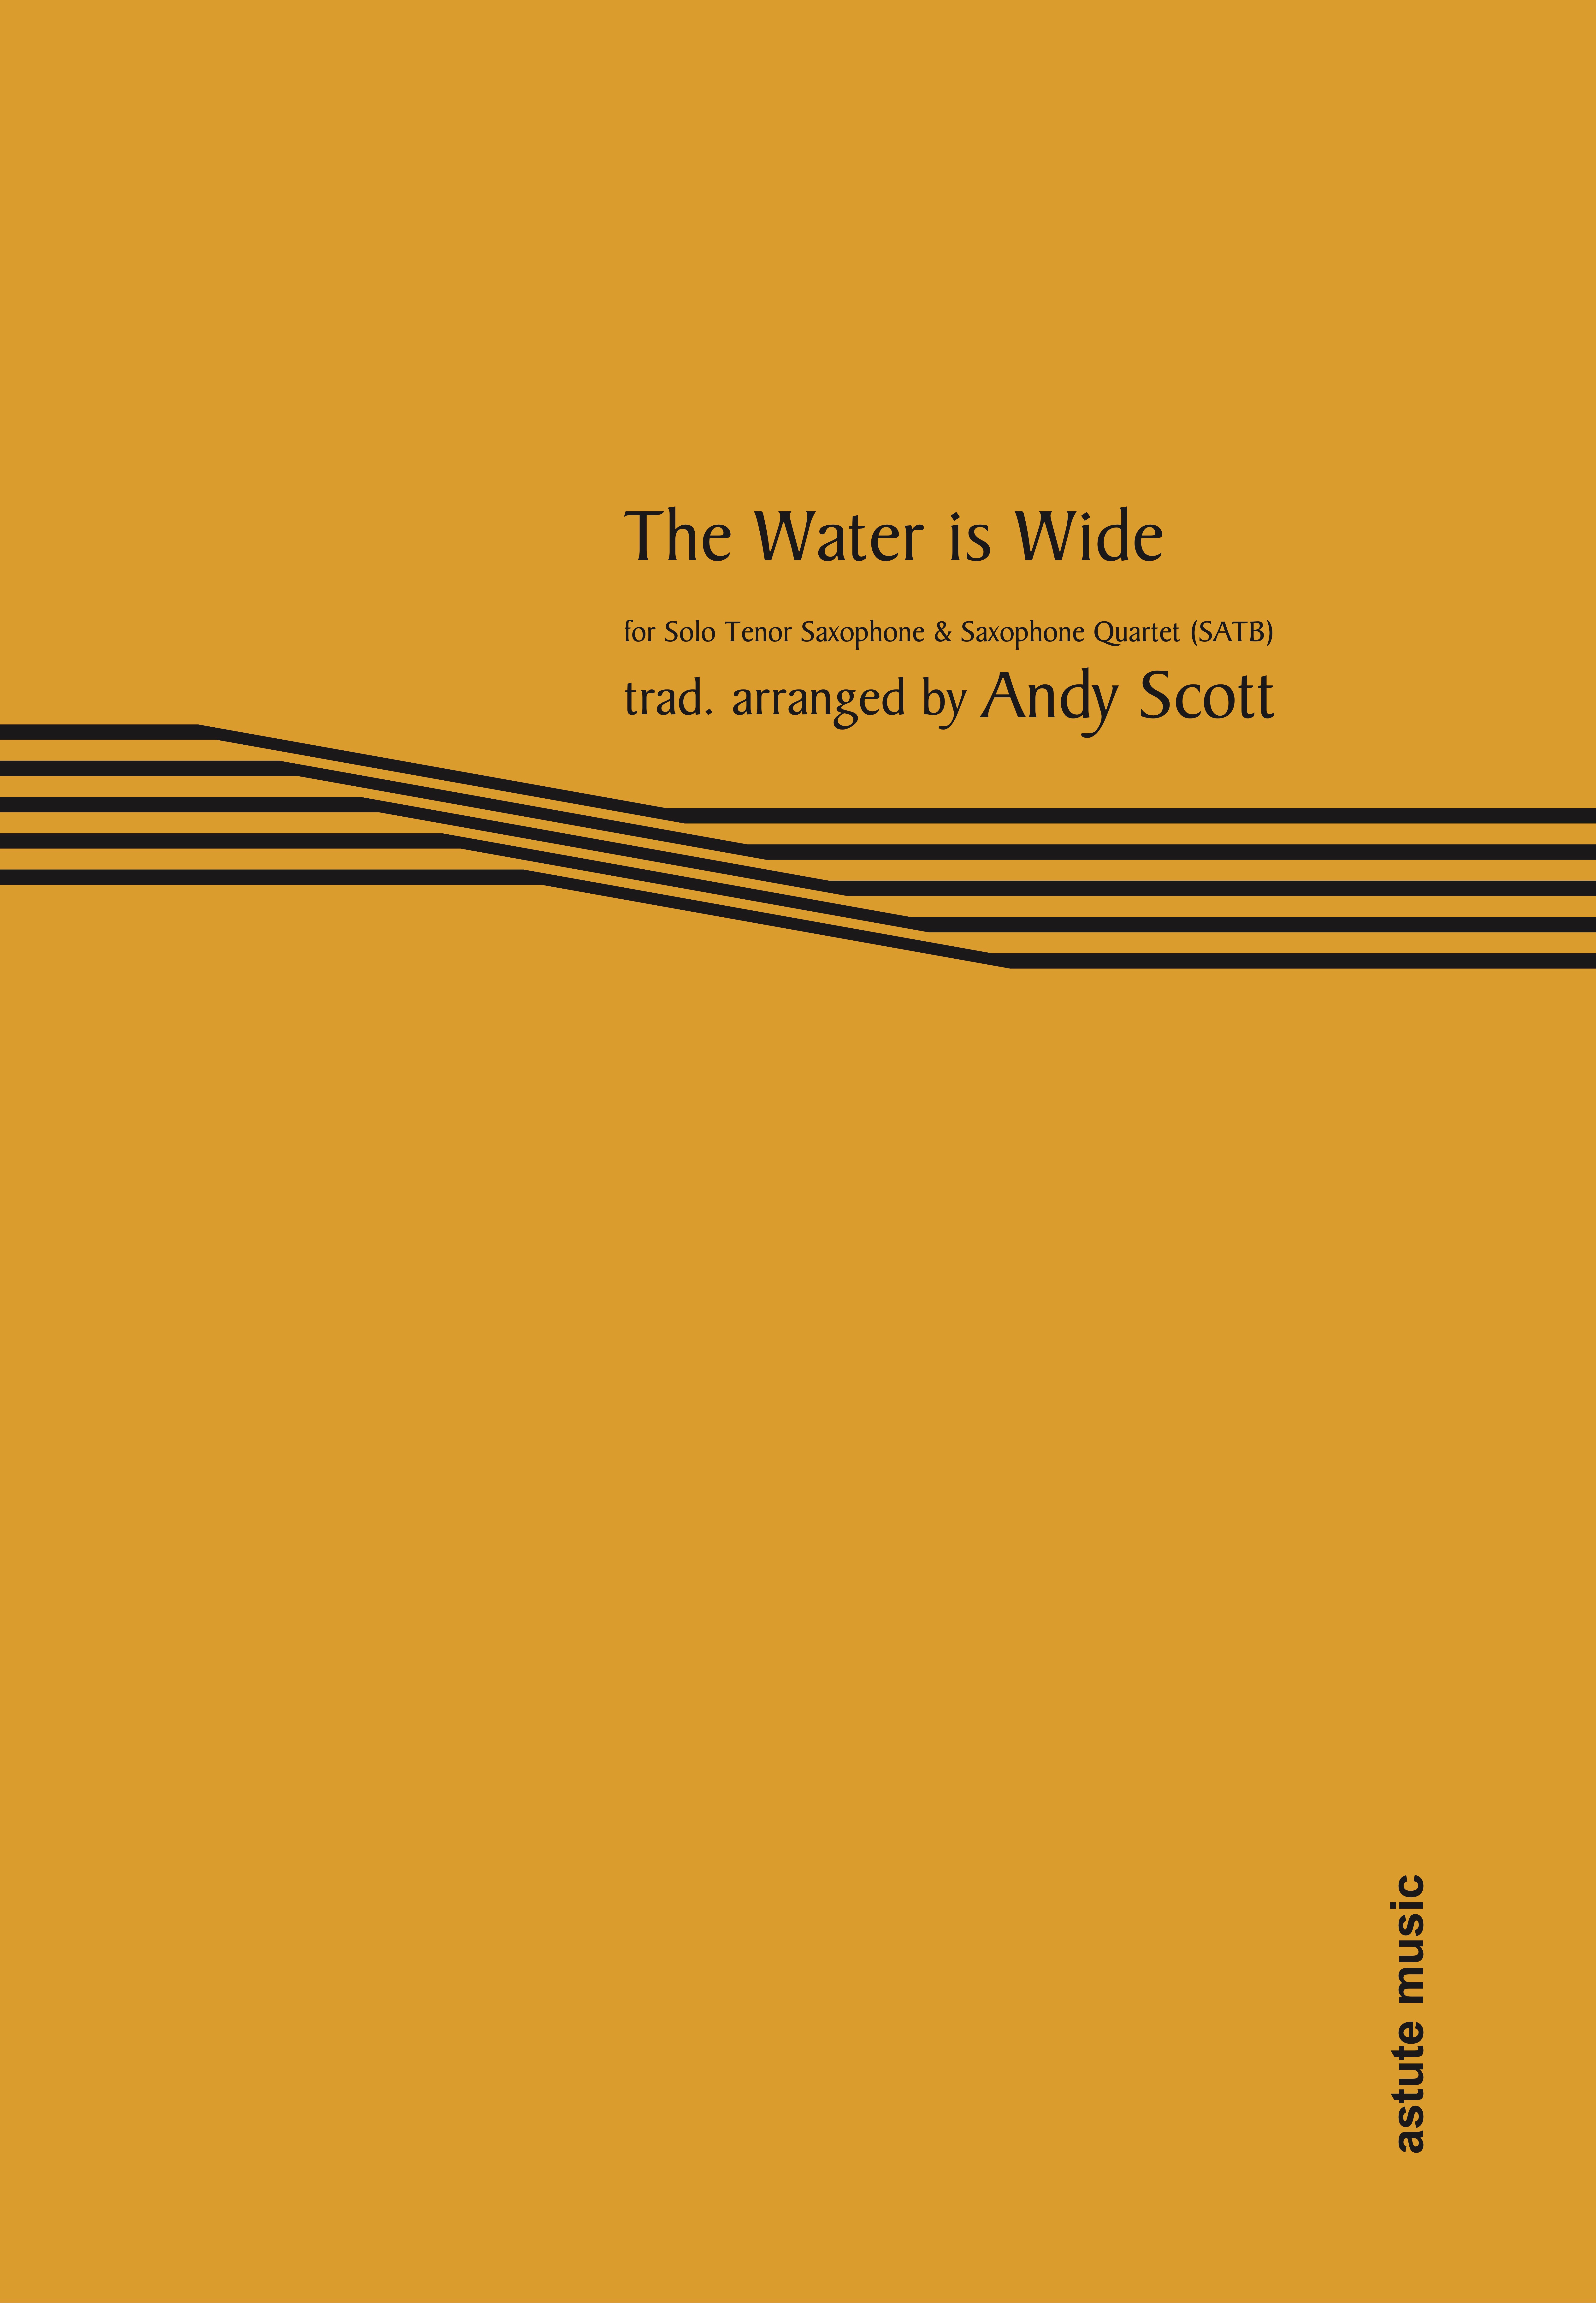 Scott The Water Is Wide Solo Ten Sax & Sax Quartet Sheet Music Songbook